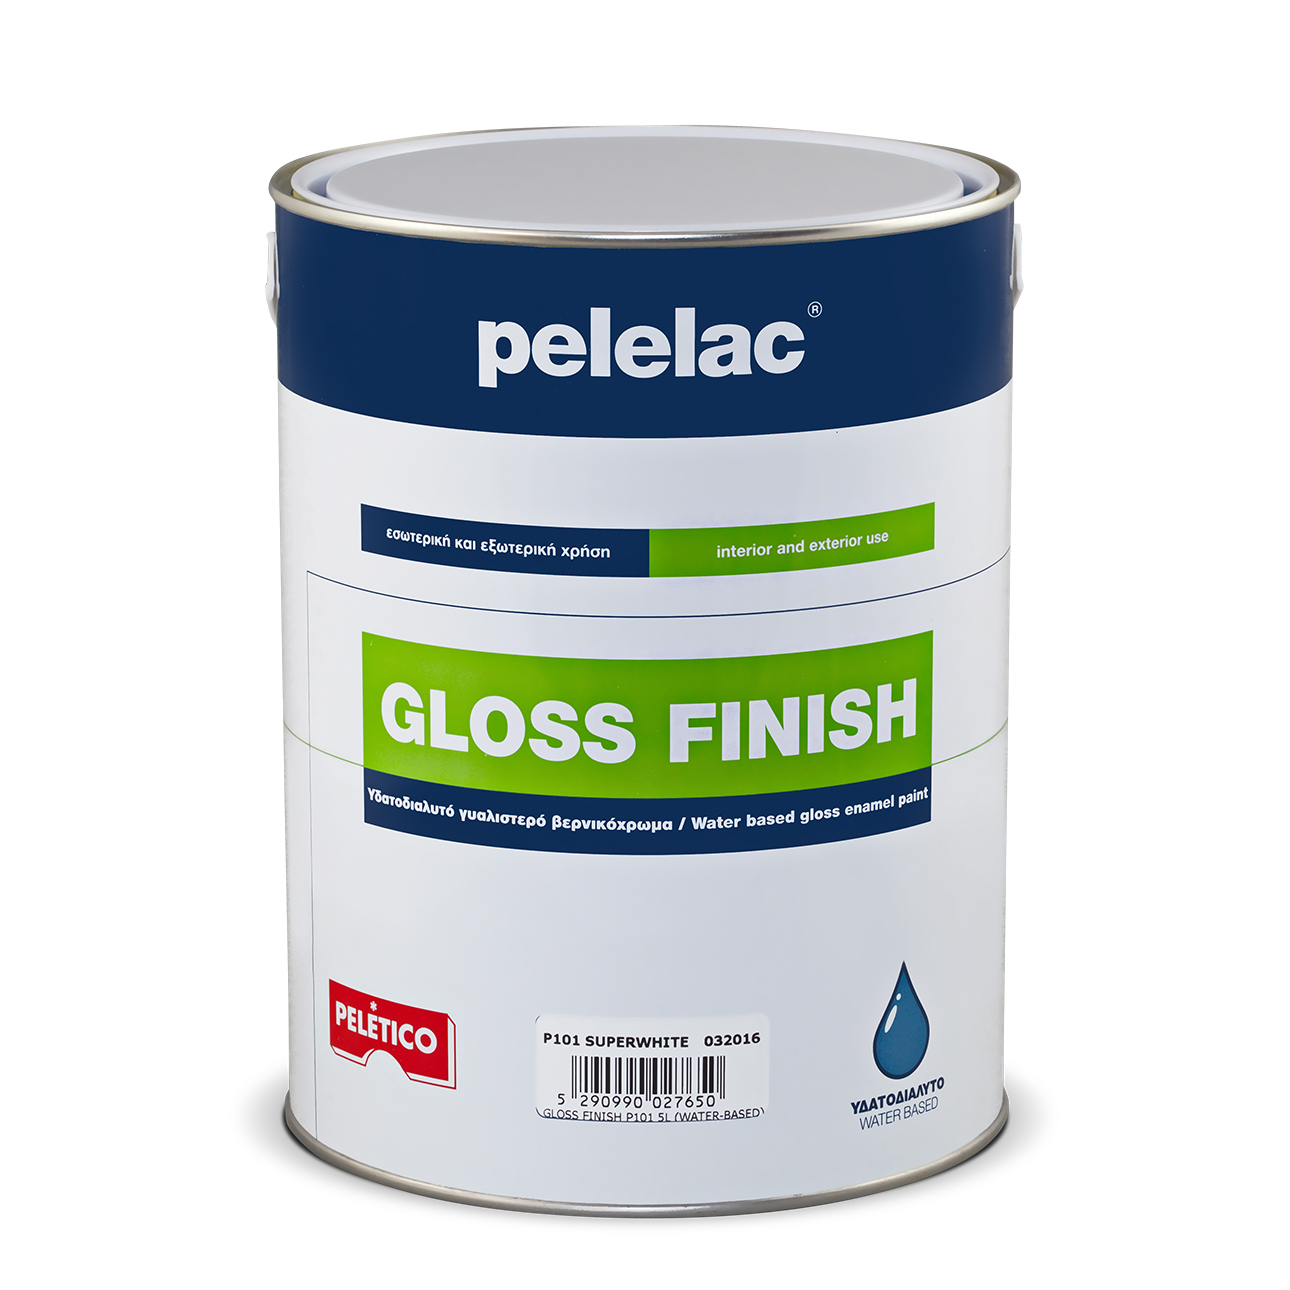 PELELAC® GLOSS FINISH PEWTER P129 2.5L ΥΔΑΤΟΔΙΑΛΥΤΟ ΧΡΩΜΑ